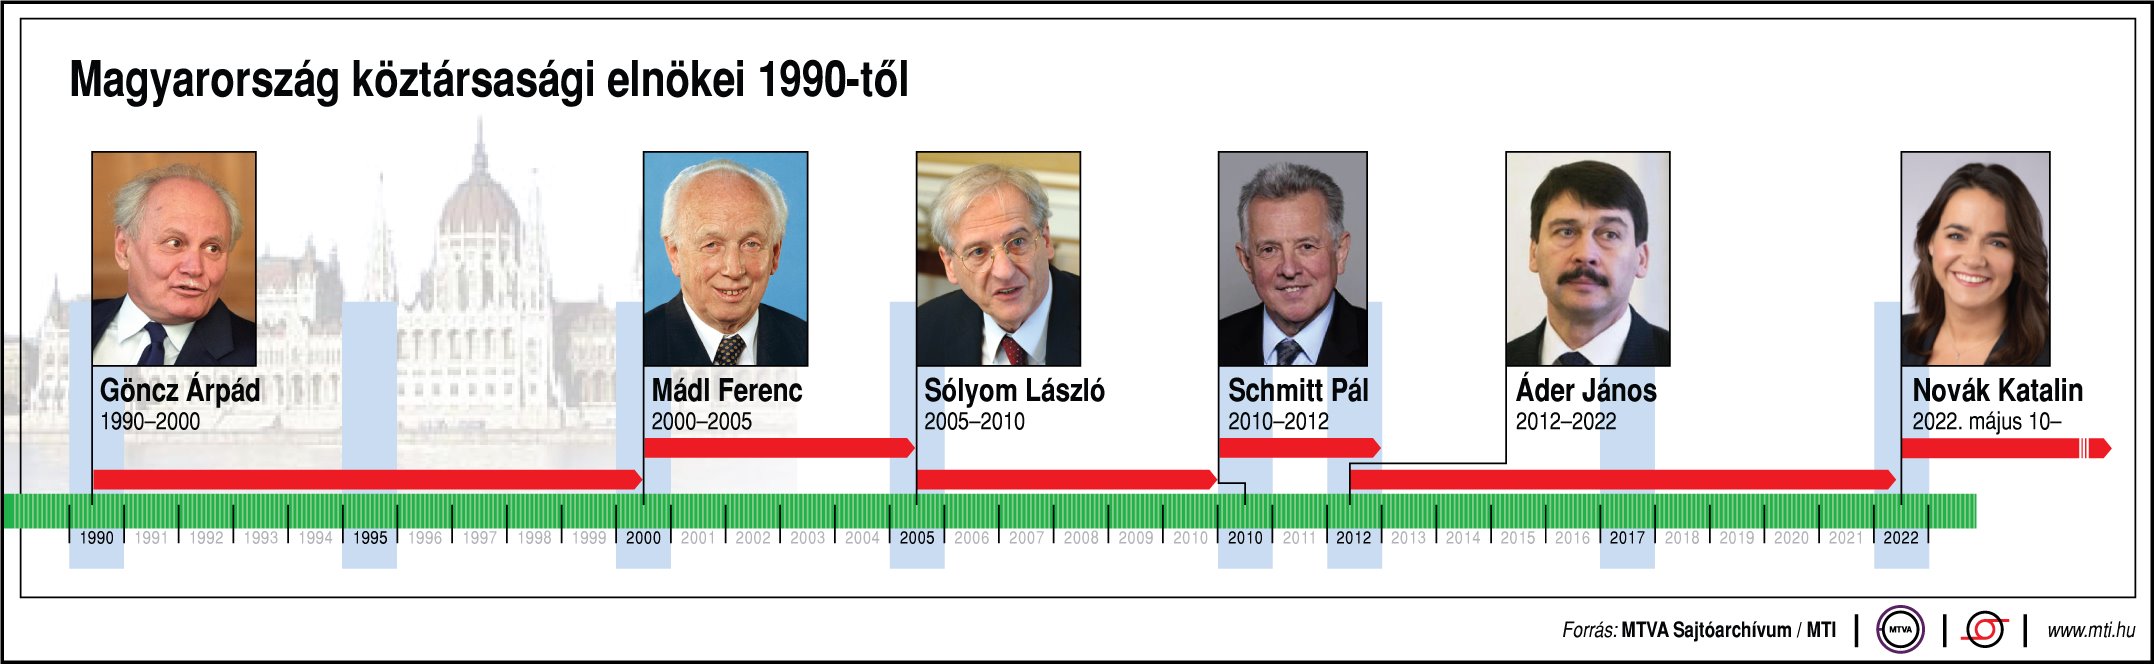 presidente ungherese dal 1990